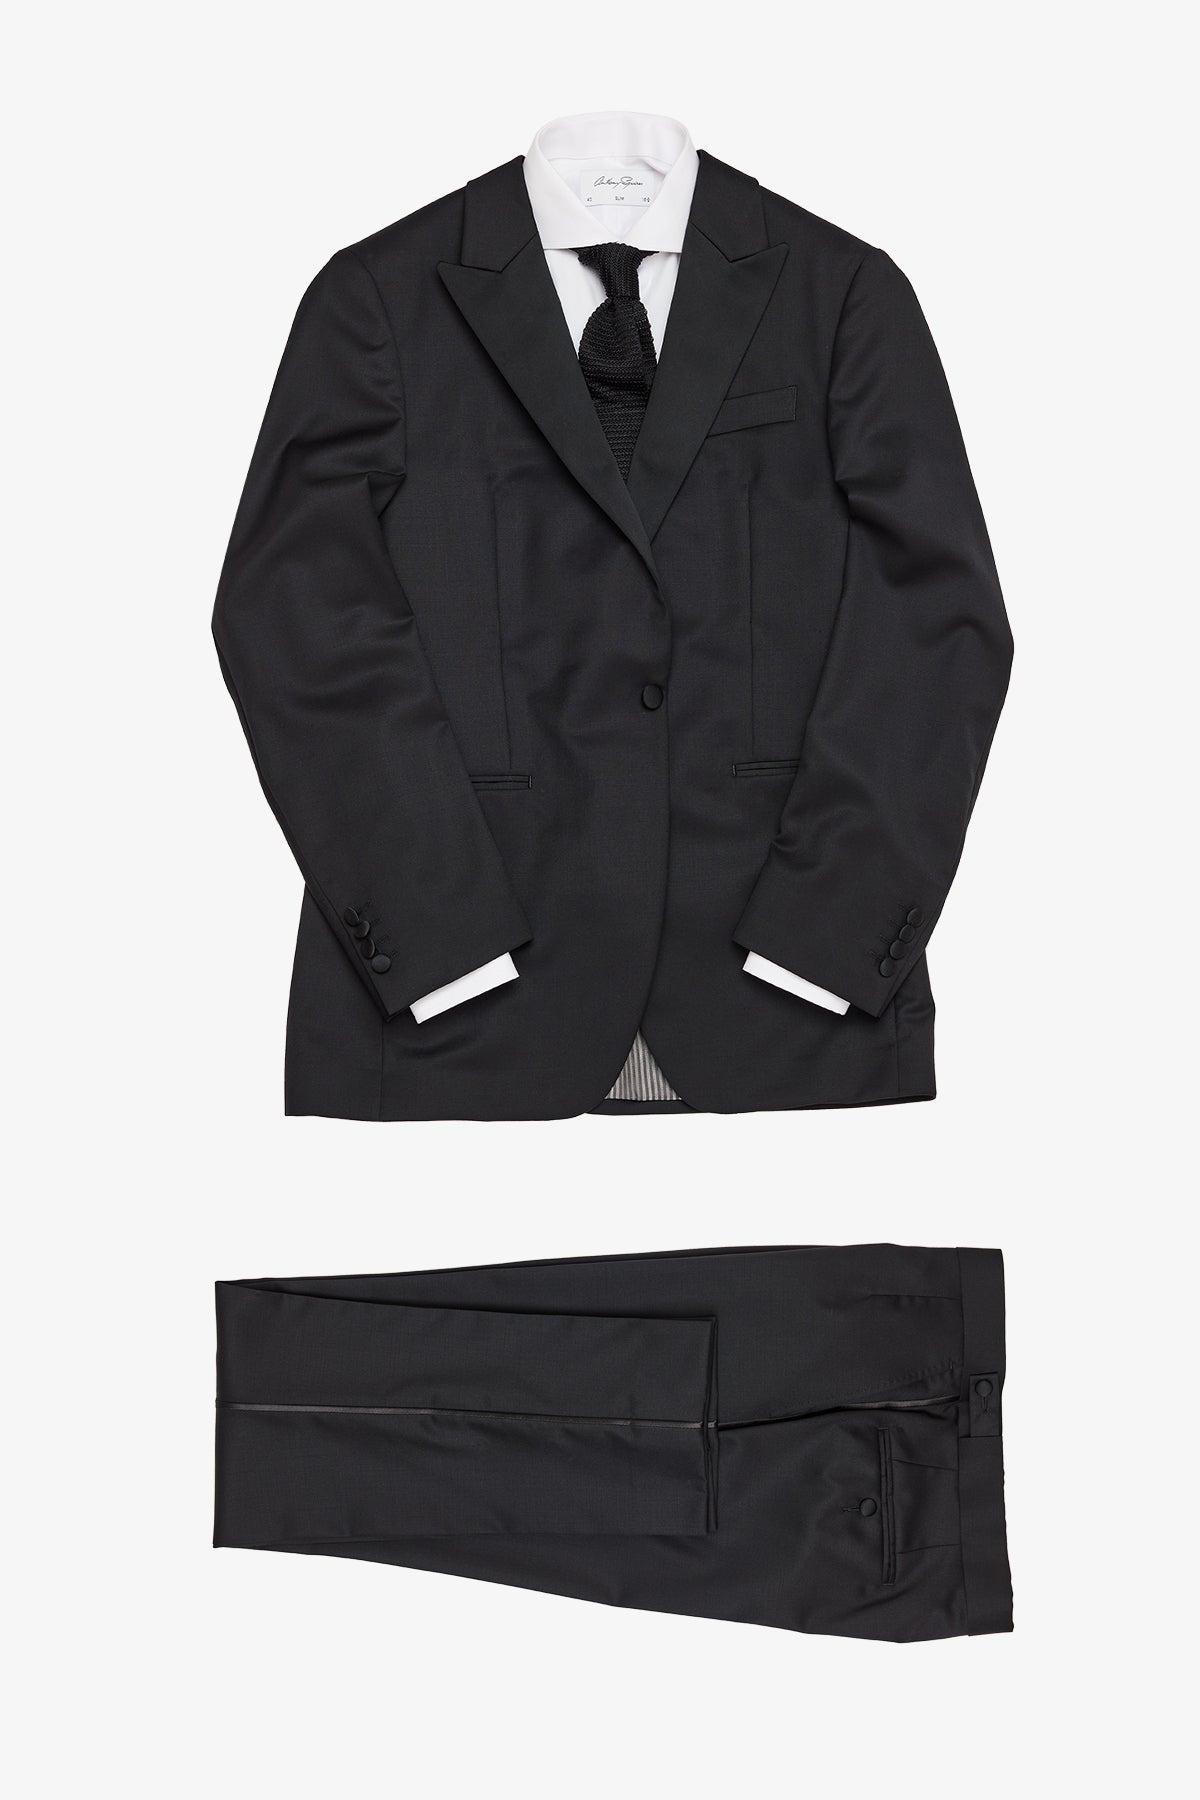 Harry - Black Dinner Suit